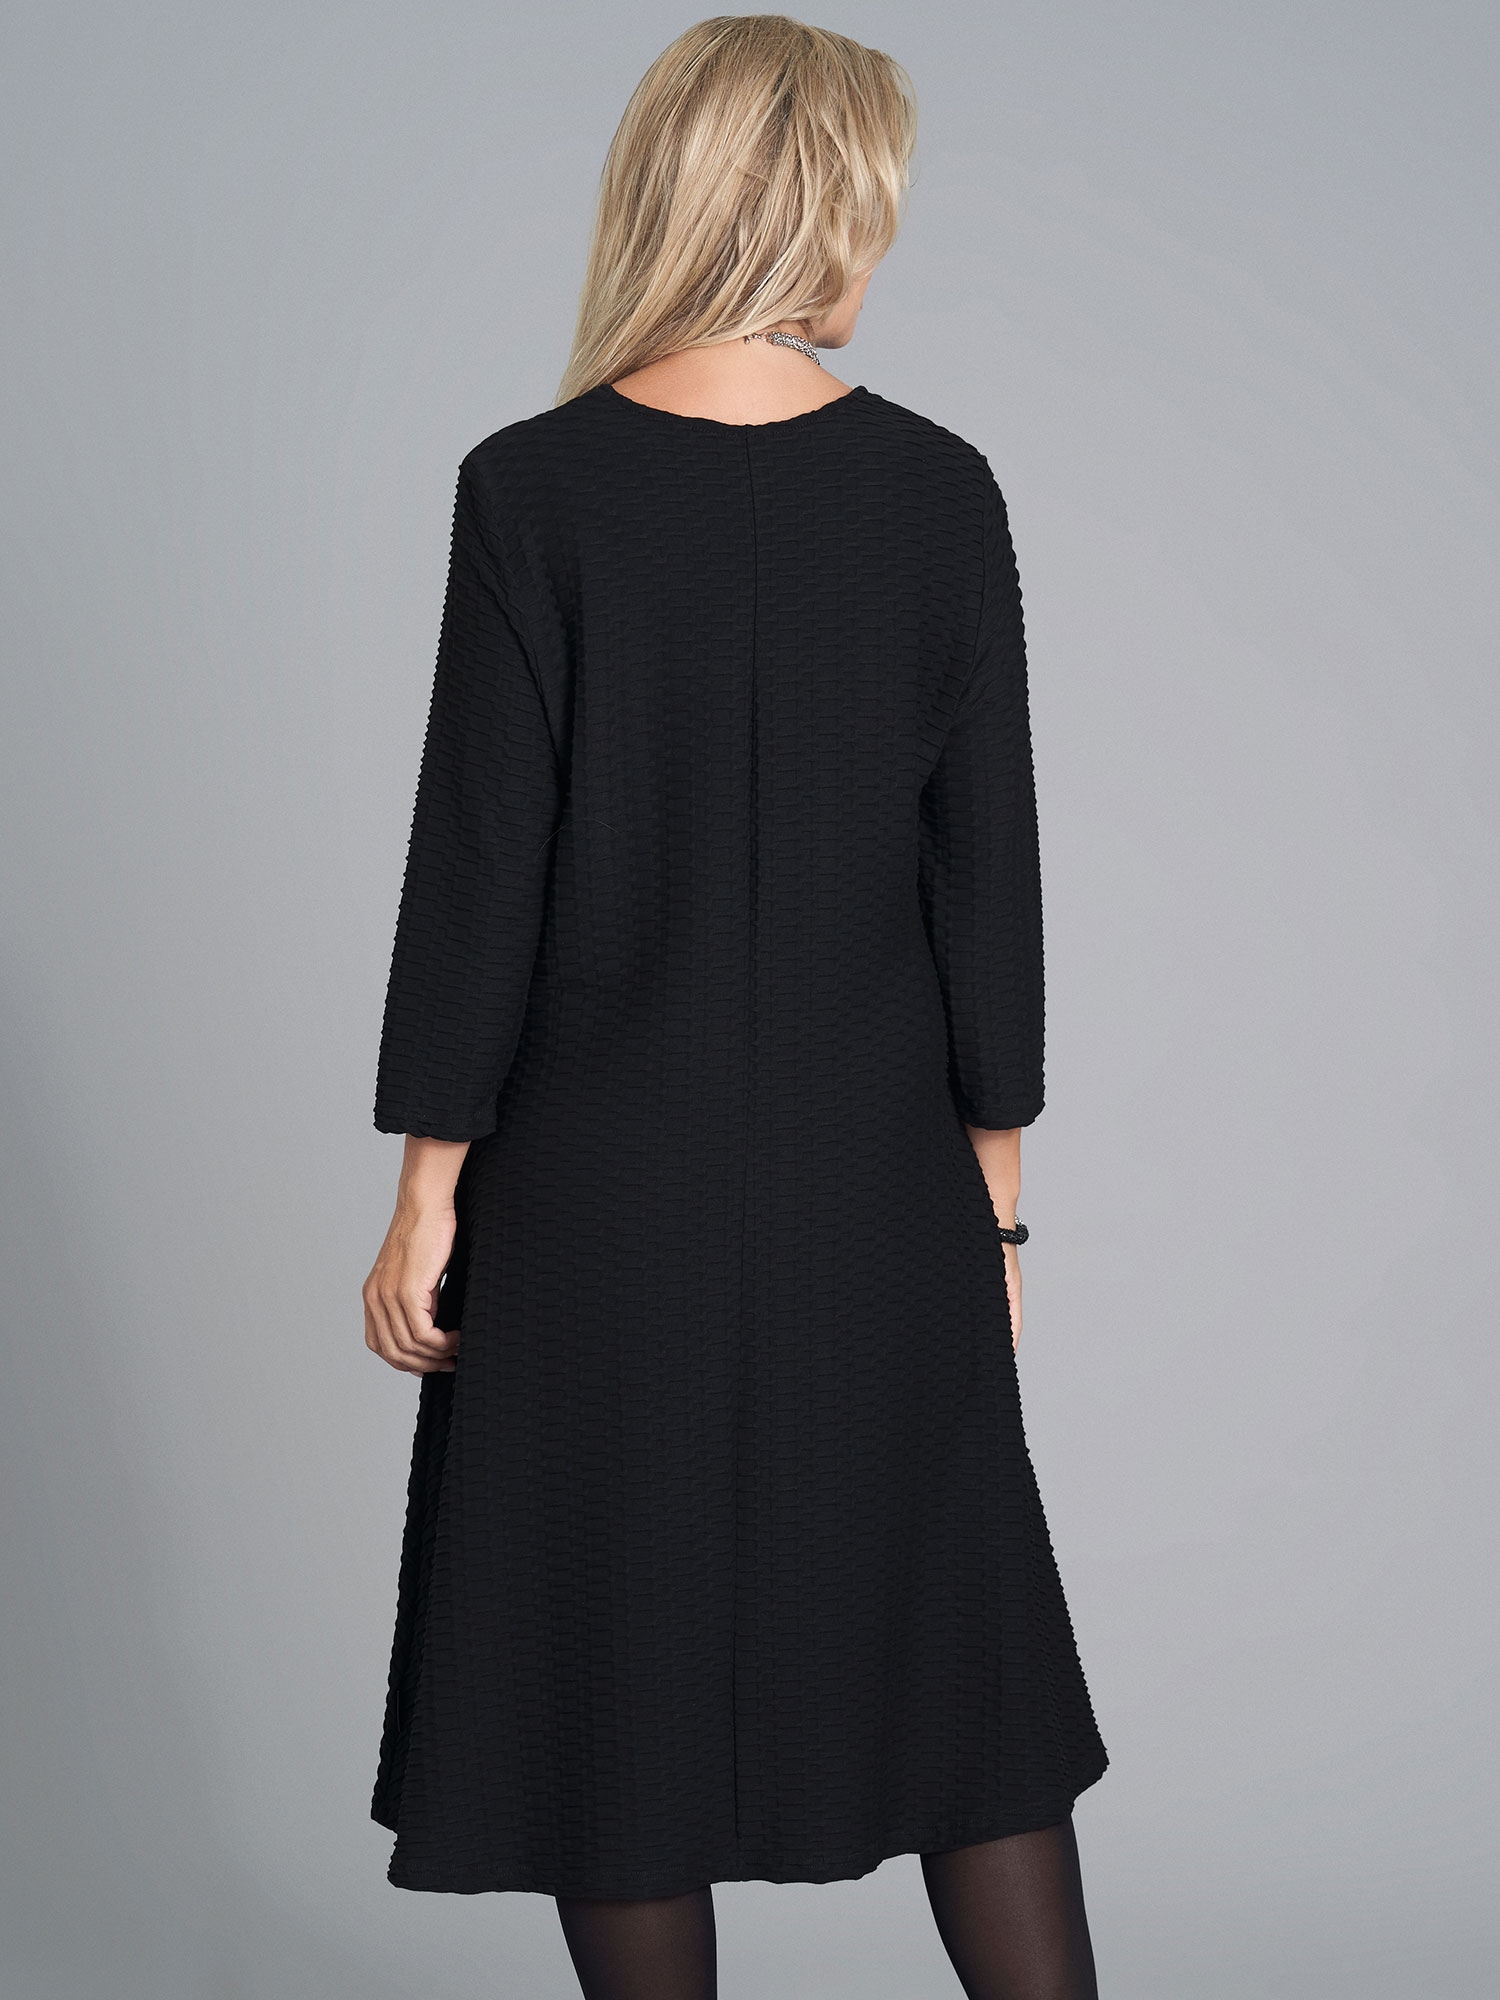 KITTY - Flot sort kjole med i kraftig viskose jersey med struktur fra Pont Neuf